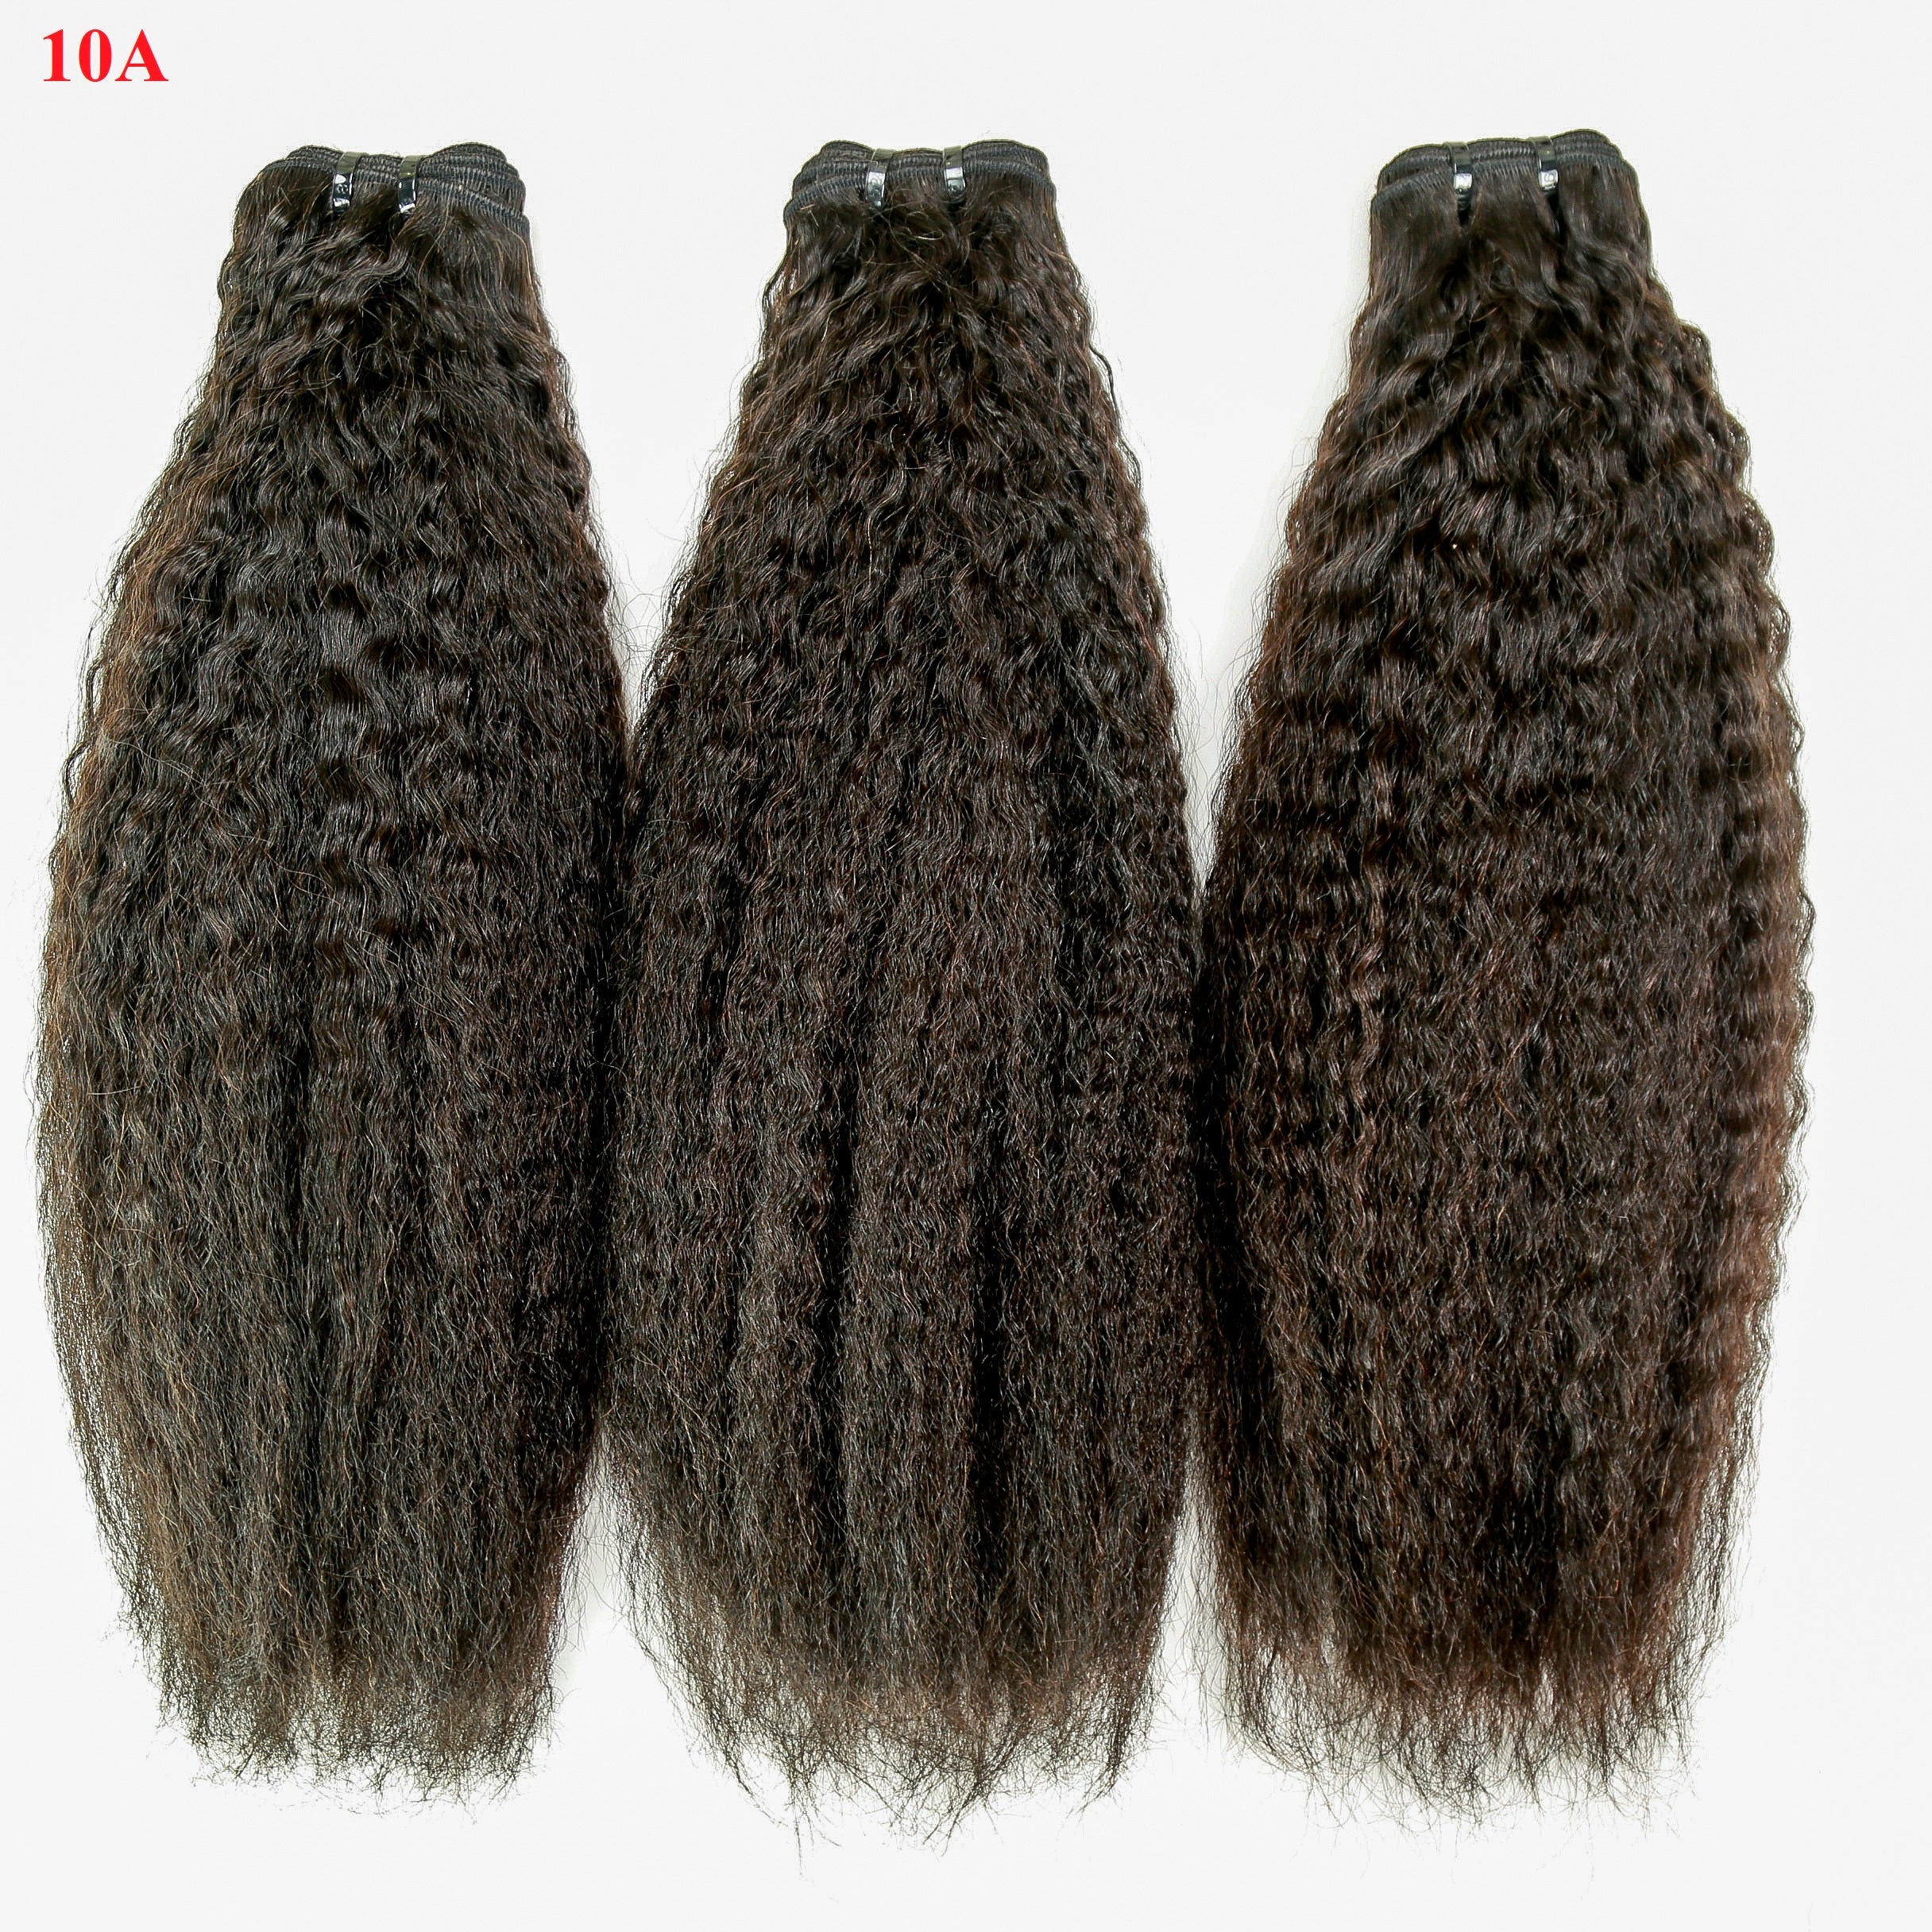 XBL Hair 9A/10A12A Kinky Straight 6x6 HD Closure With 3 Humann Hair Bundles